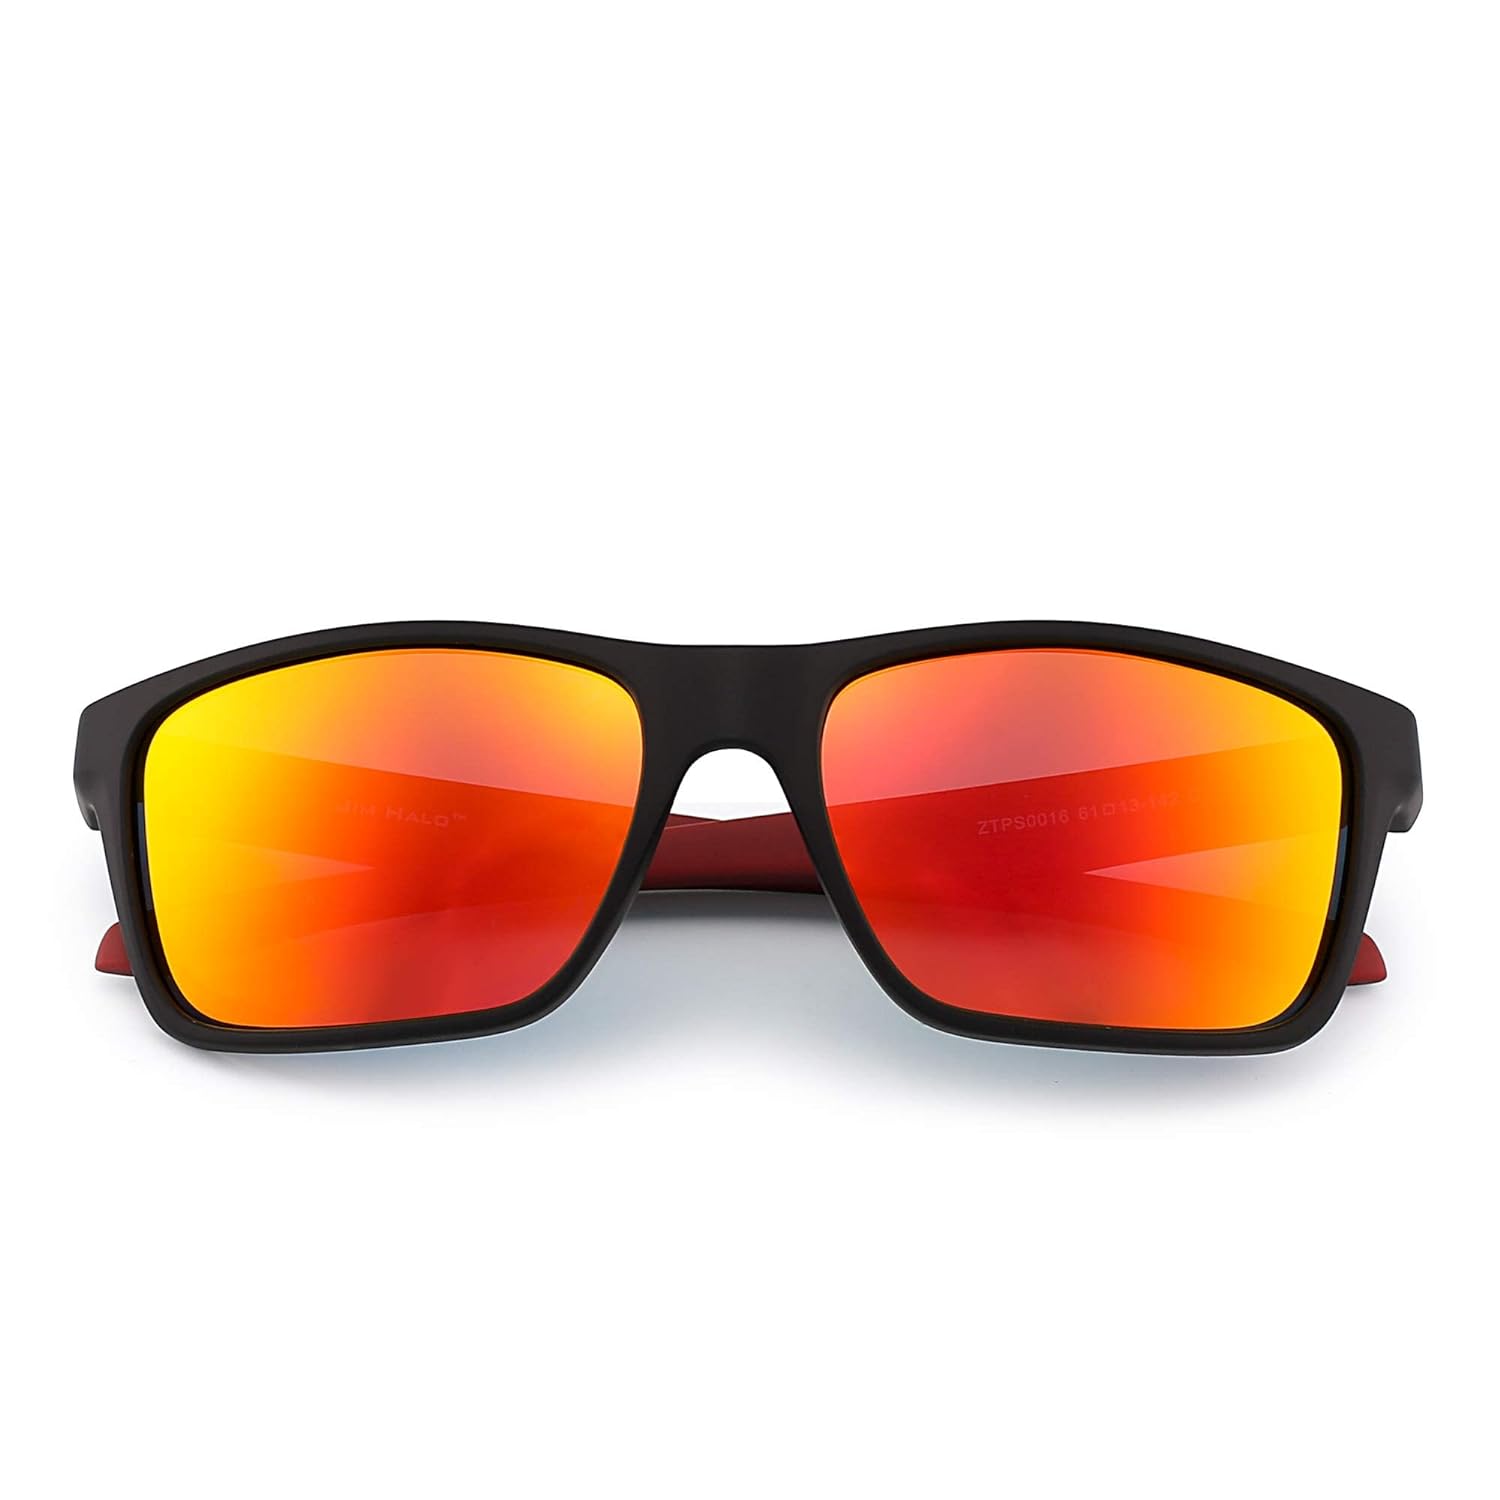 JIM HALO Polarized Sports Sunglasses Mirror Wrap Around Driving